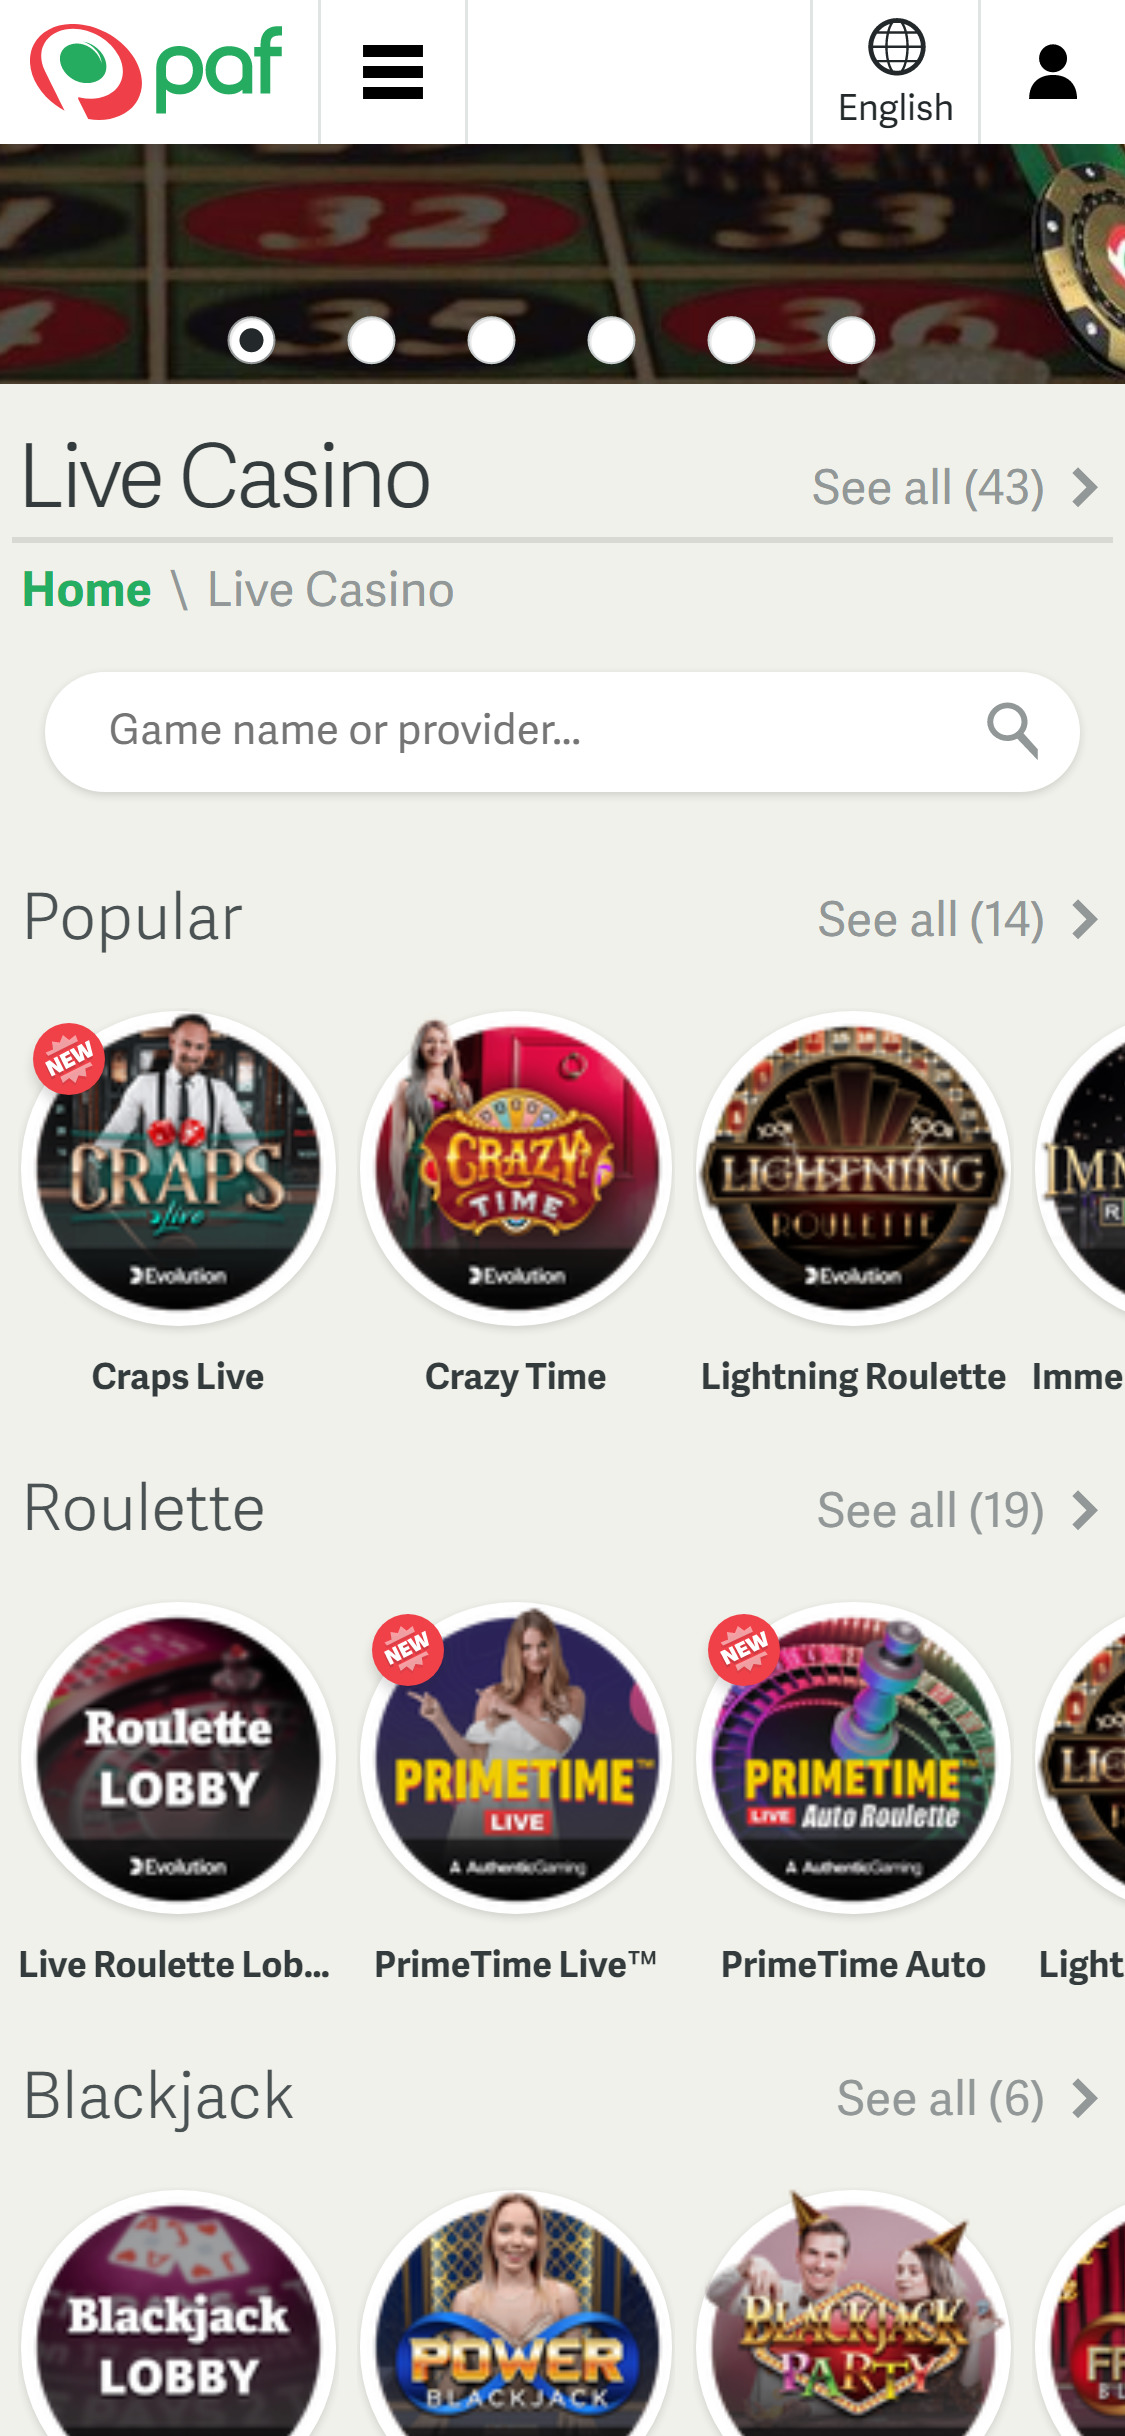 Paf Casino Mobile Live Dealer Games Review